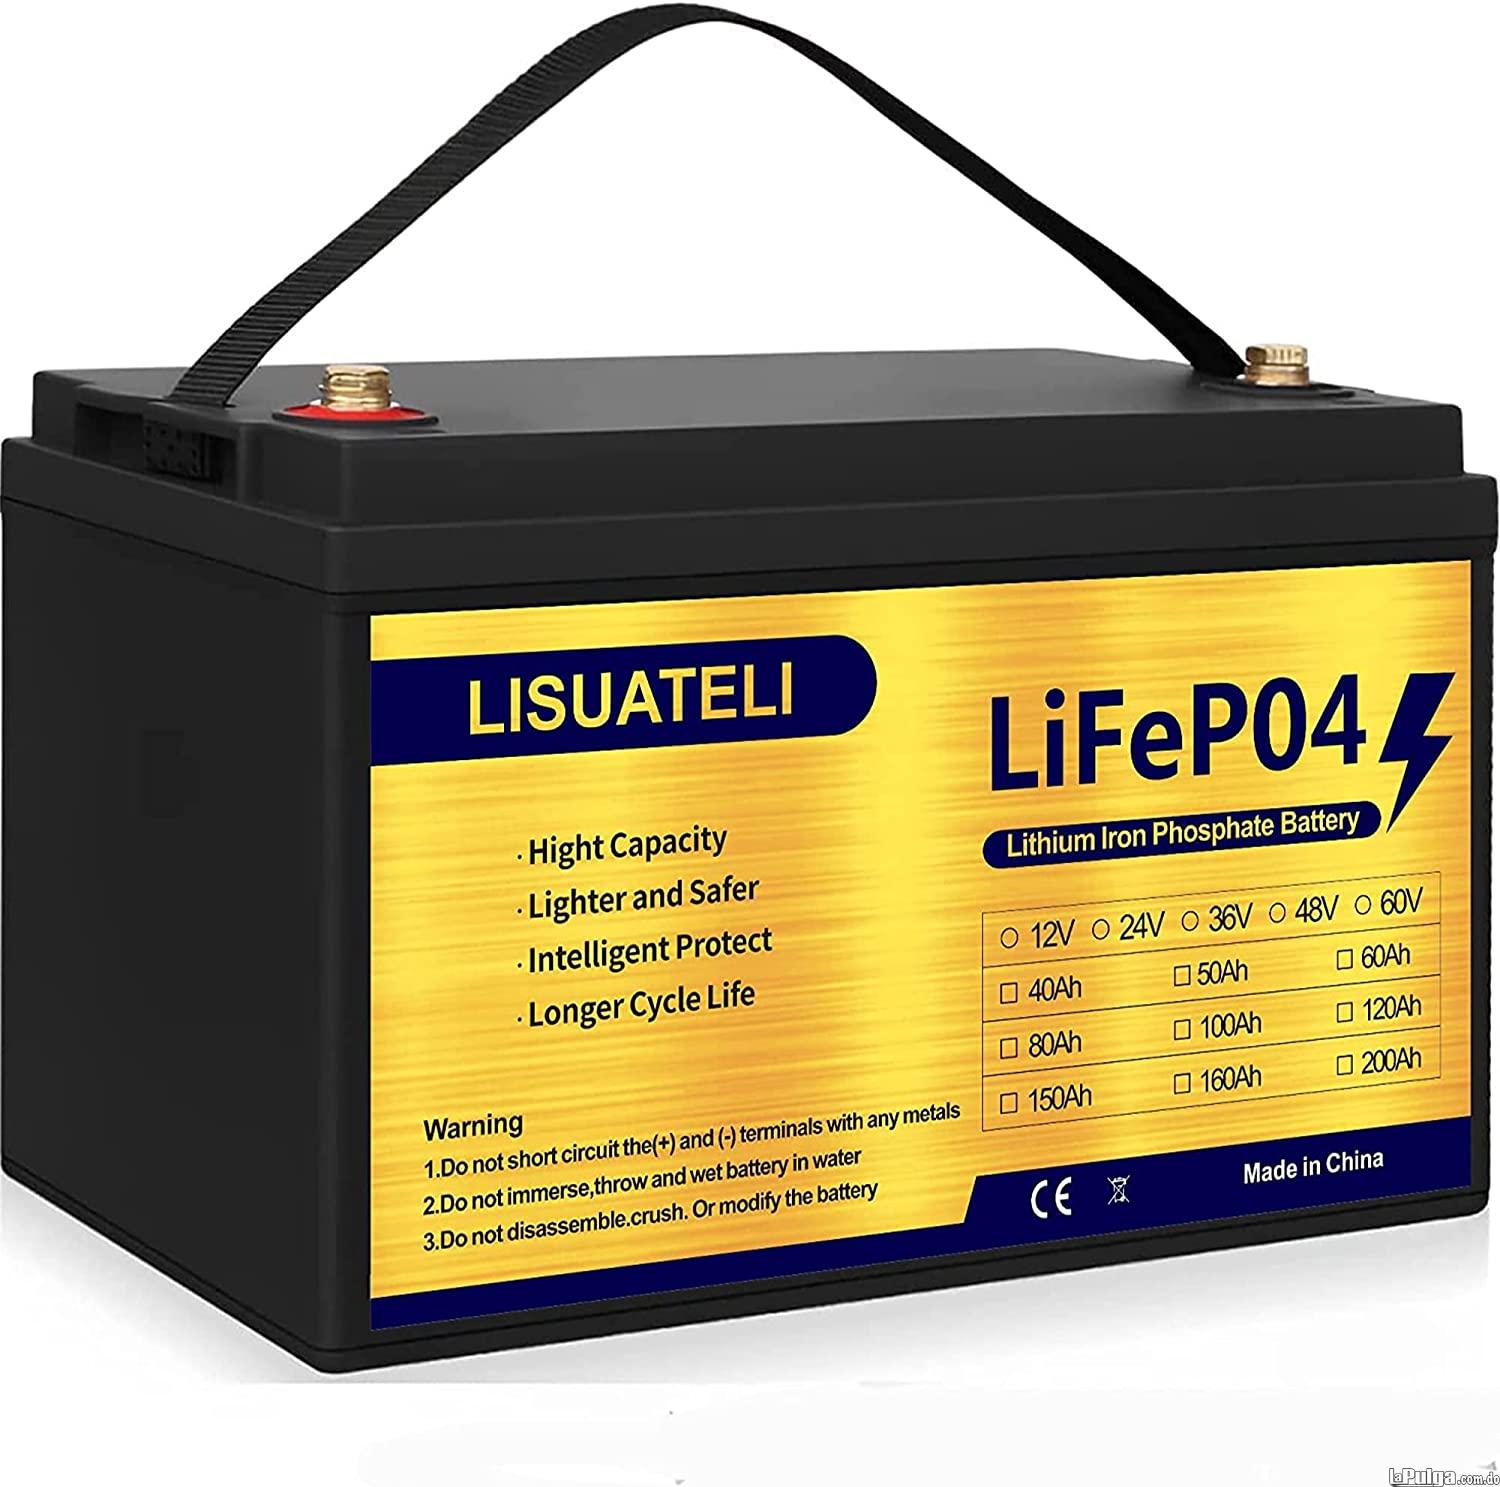    Baterias litio lithium para carros de golf   Foto 7148868-1.jpg